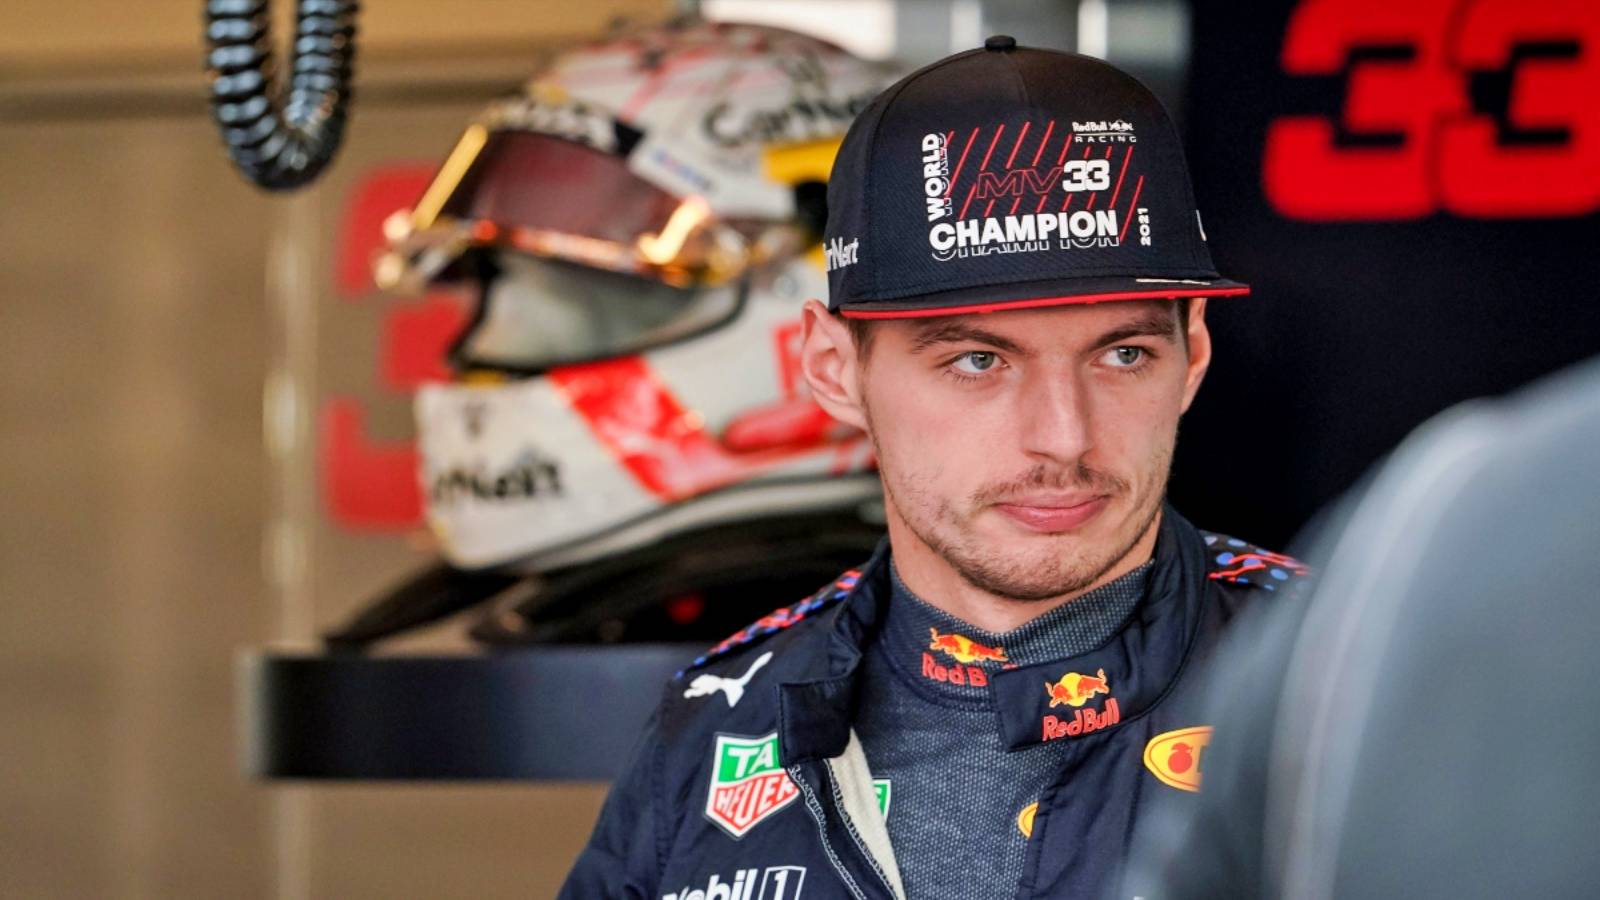 Formula 1 Max Verstappen ATENTIONEAZA Spune Echipa Red Bull